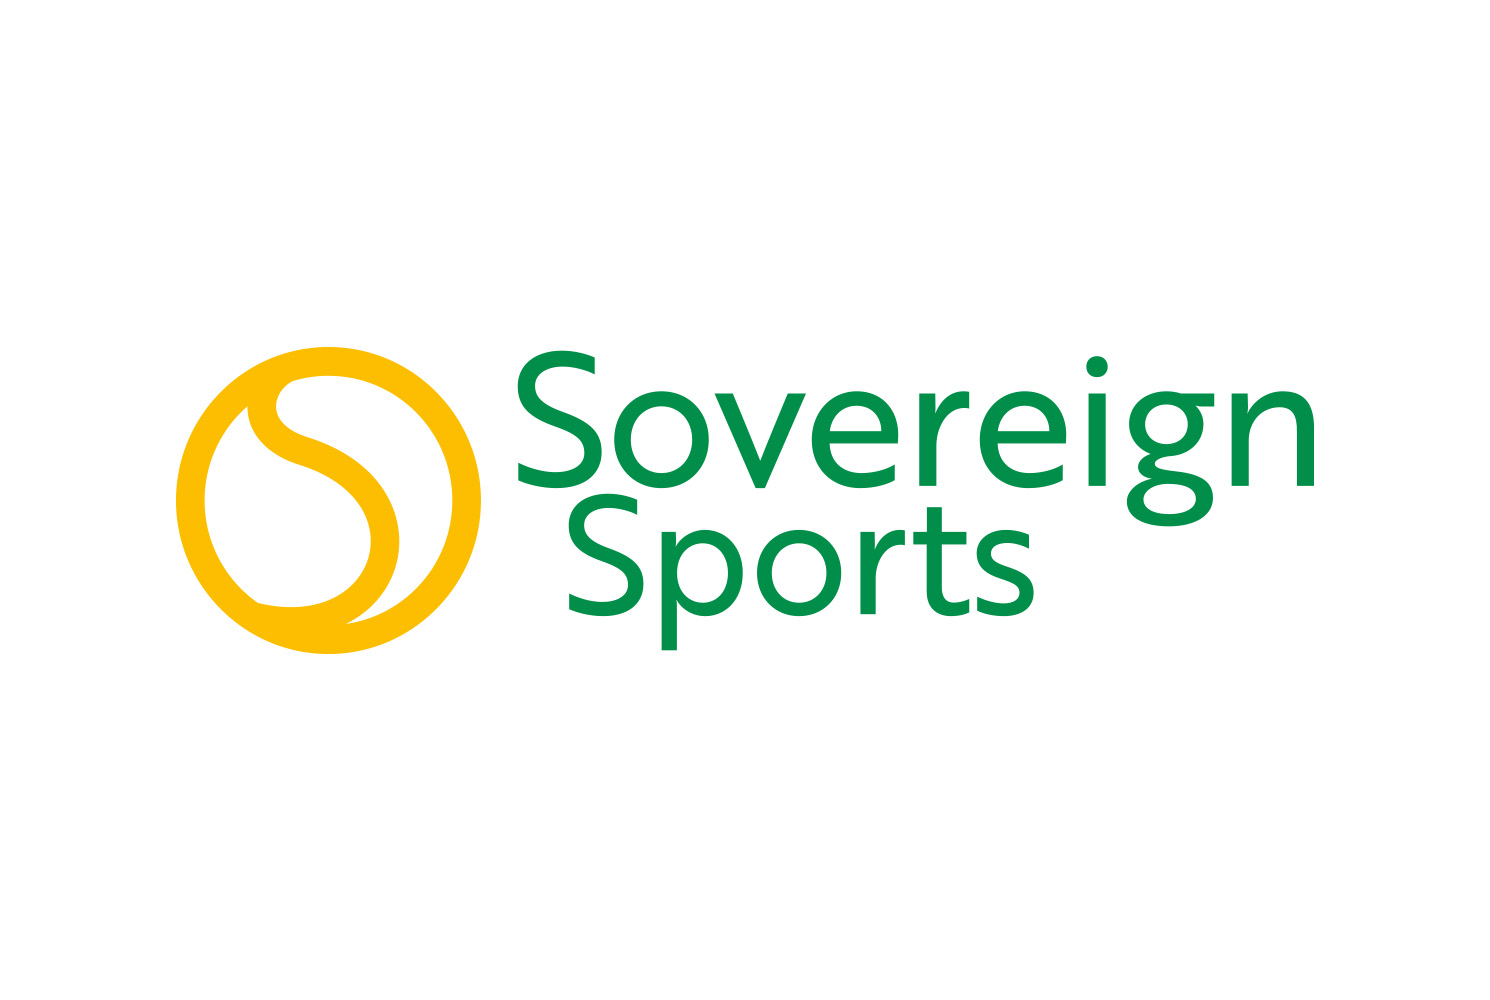 Sovereign Sports Logo on White Background